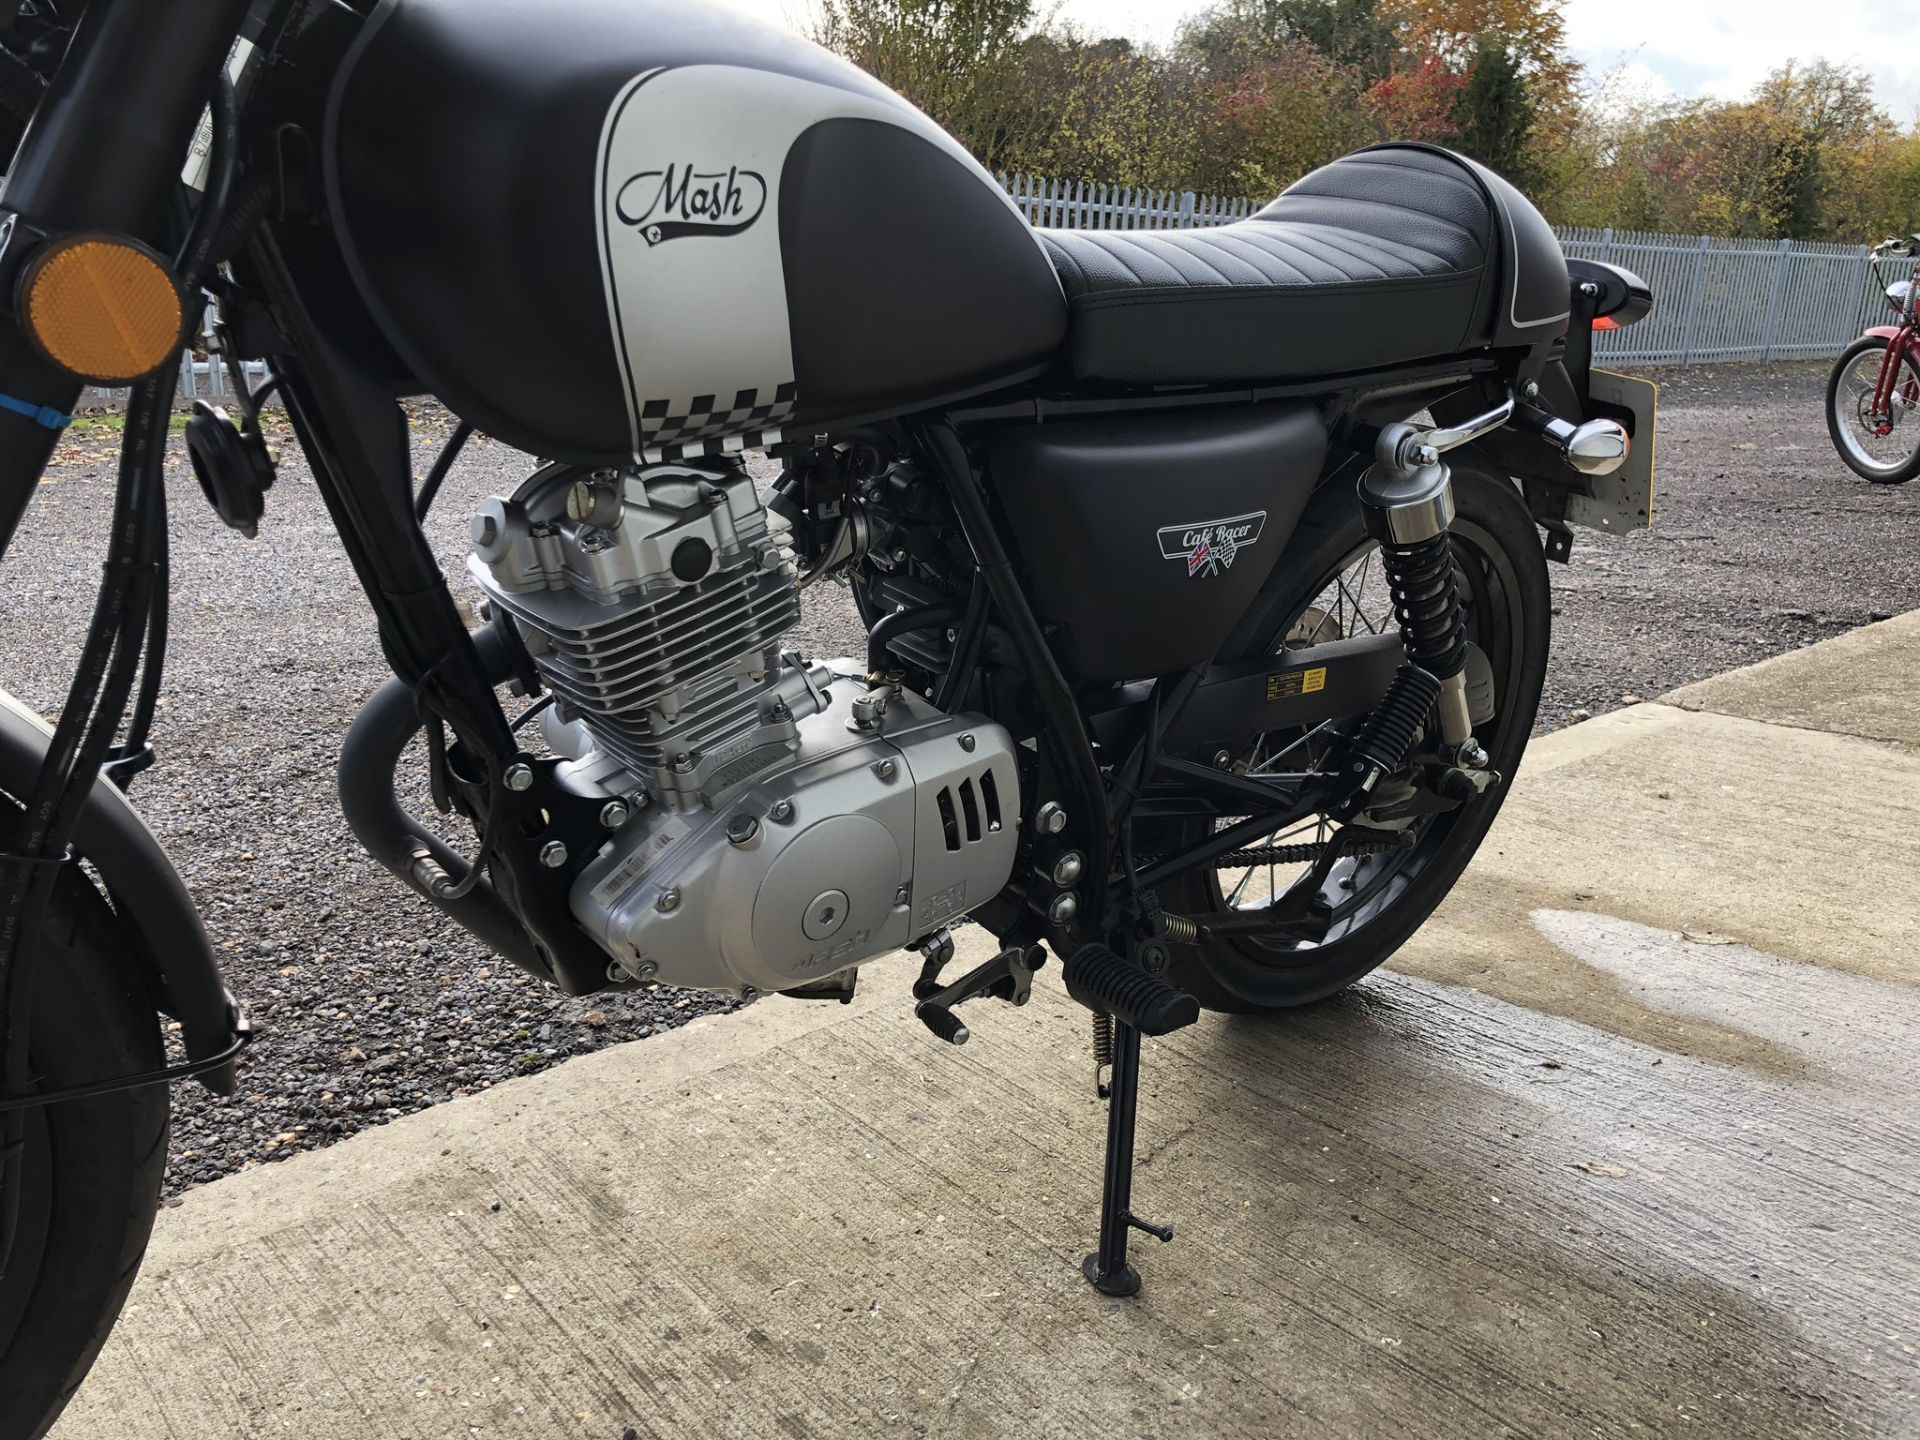 Mash Black Cafe Racer 125cc Motorcycle Engine: Single Cylinder Air Cooled S.O.H.C 124cc Electronic - Image 8 of 18